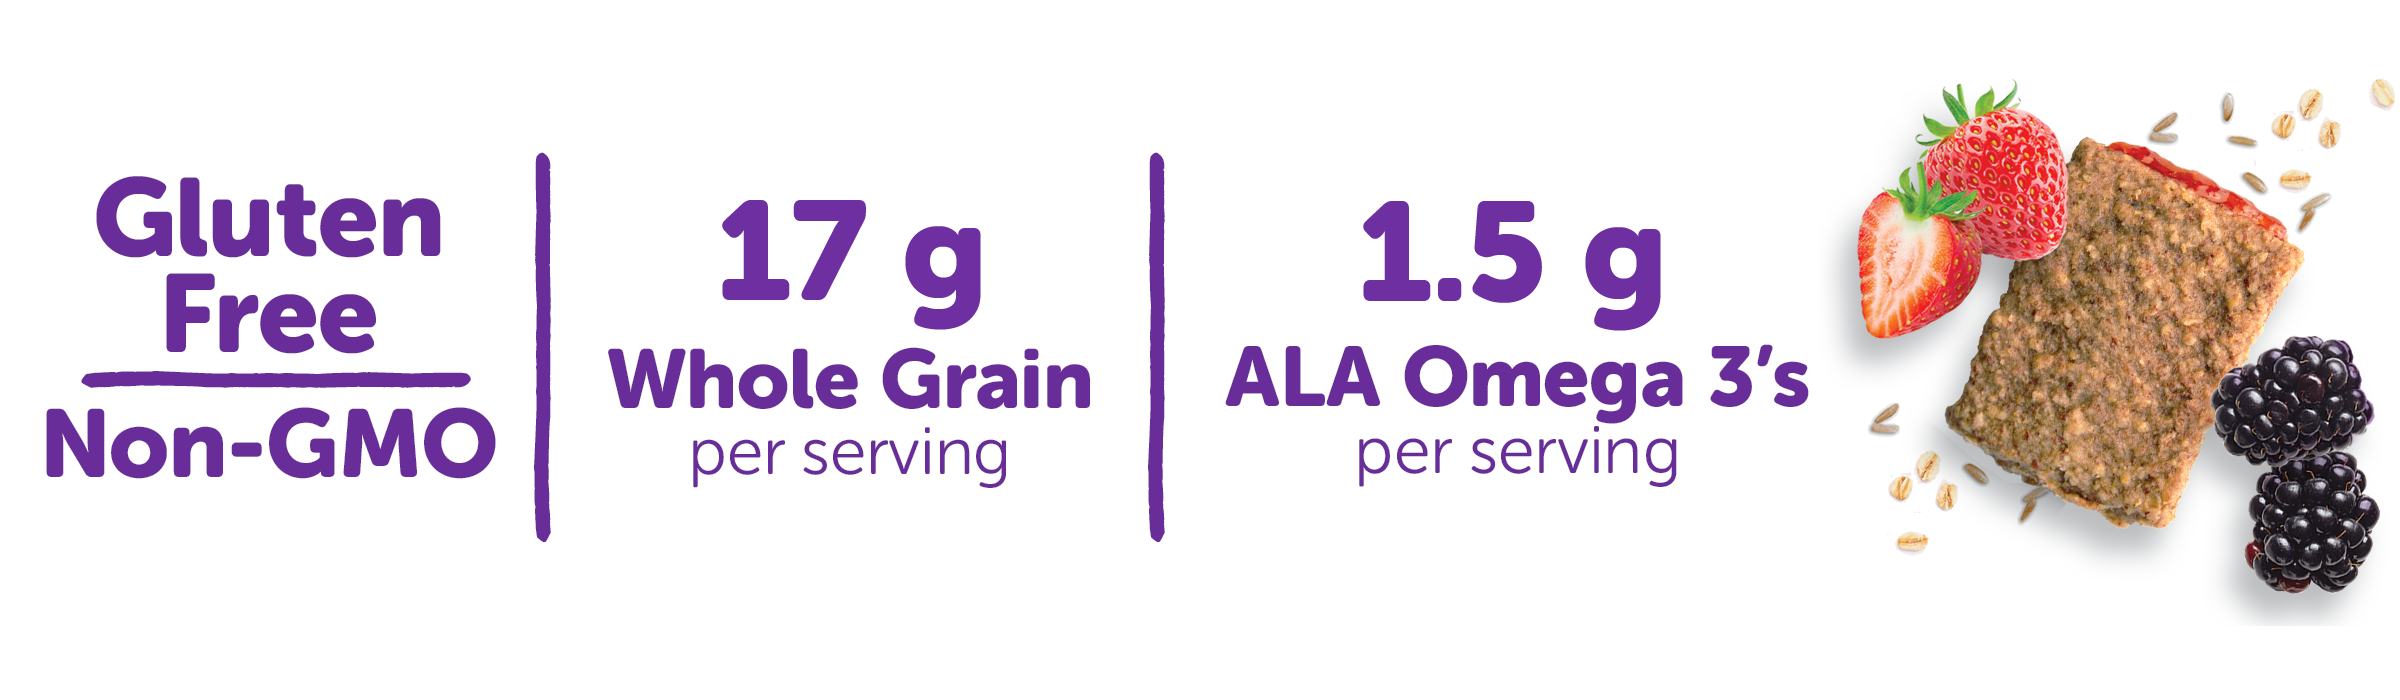 Gluten Free / 17g Whole Grain per serving / 1.5 g ALA Omega 3's per serving